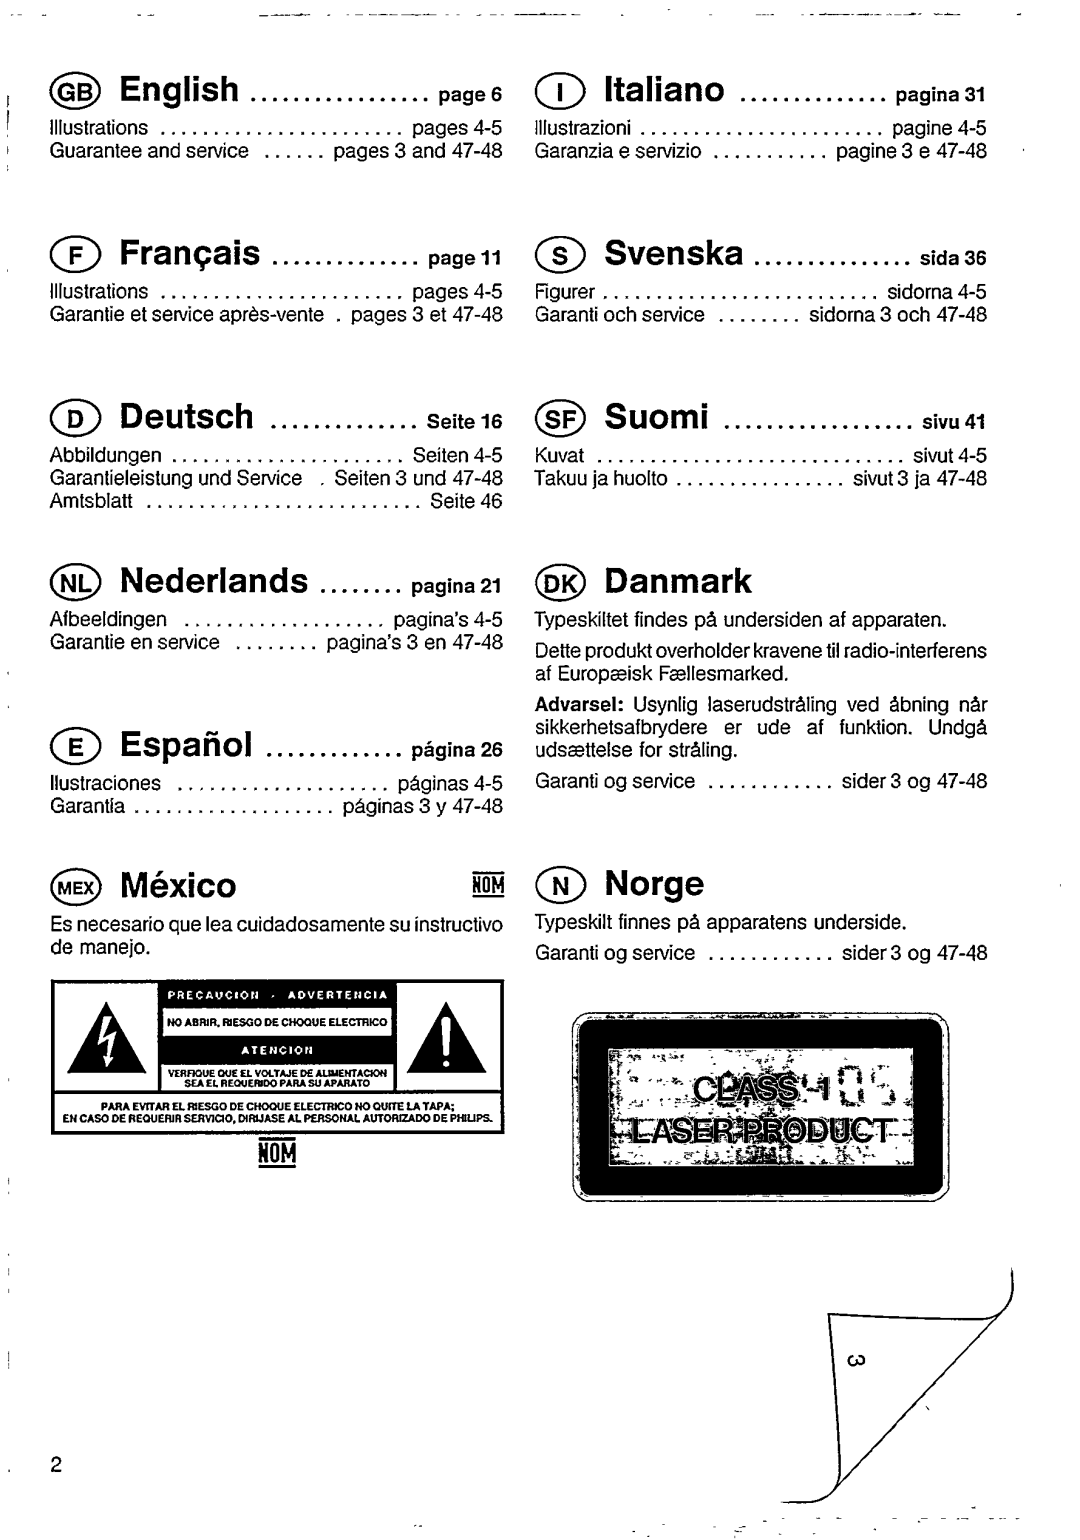 Philips AZ 6897 manual 